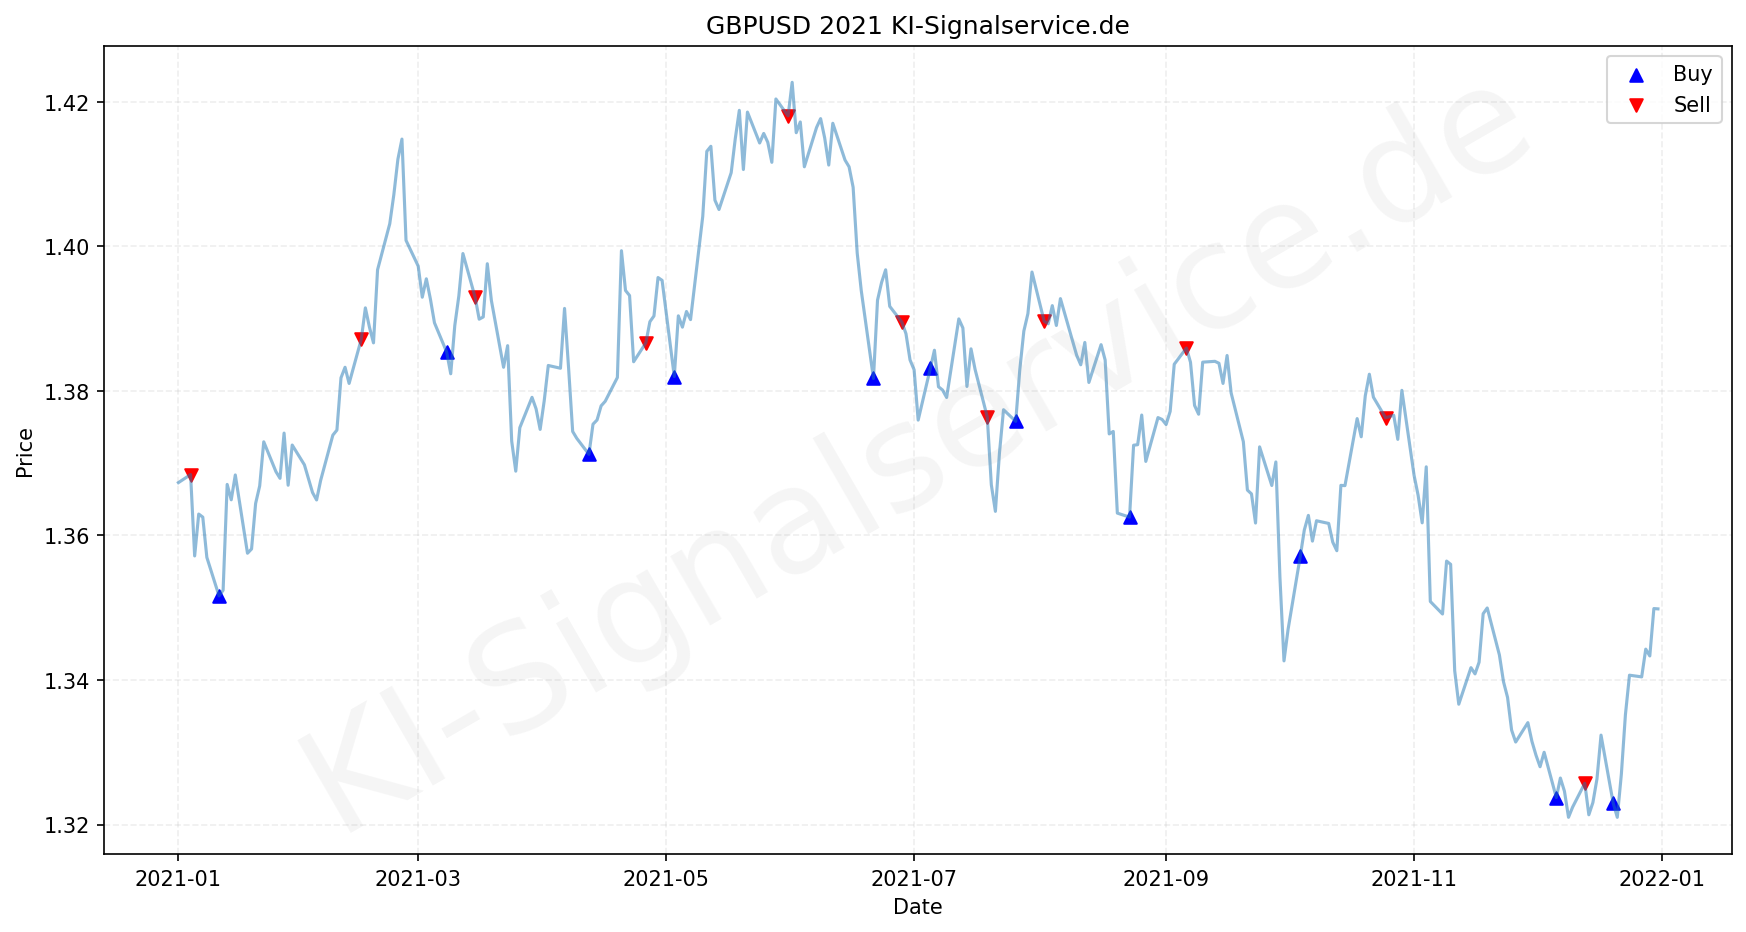 GBPUSD Chart - KI Tradingsignale 2021